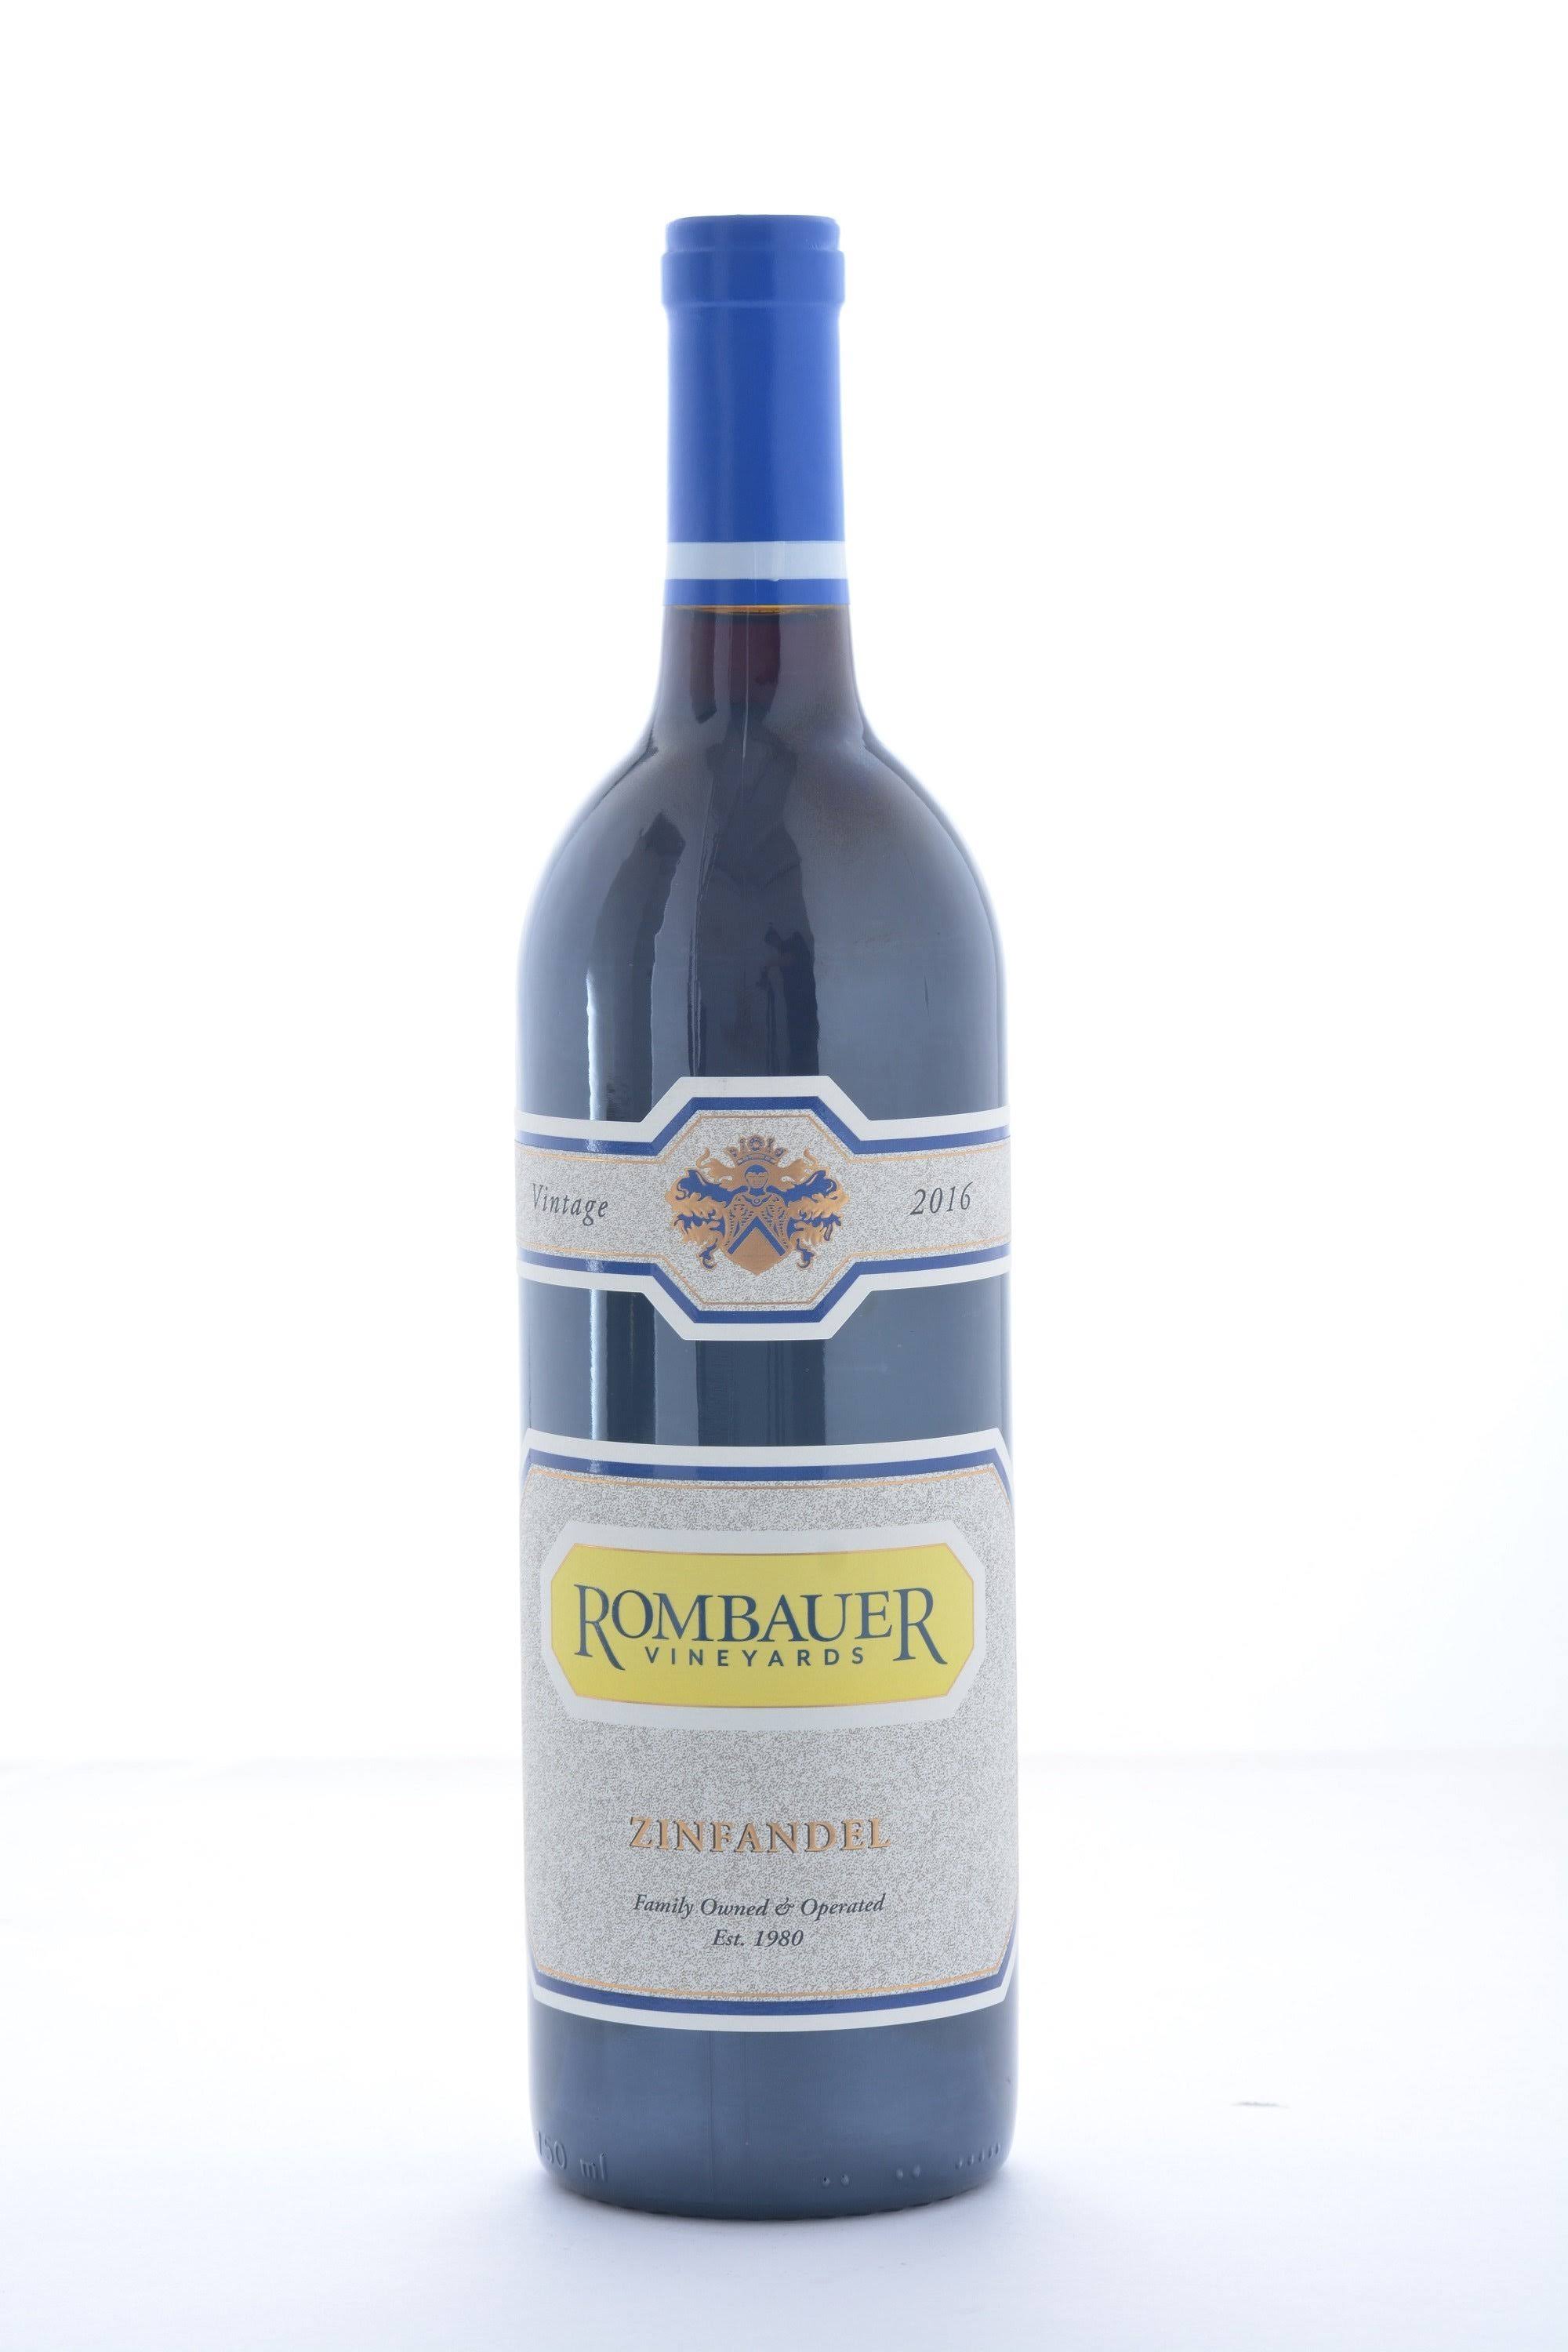 Rombauer Zinfandel, Rombauer Vineyards, Napa, California, 2011 - 750 ml